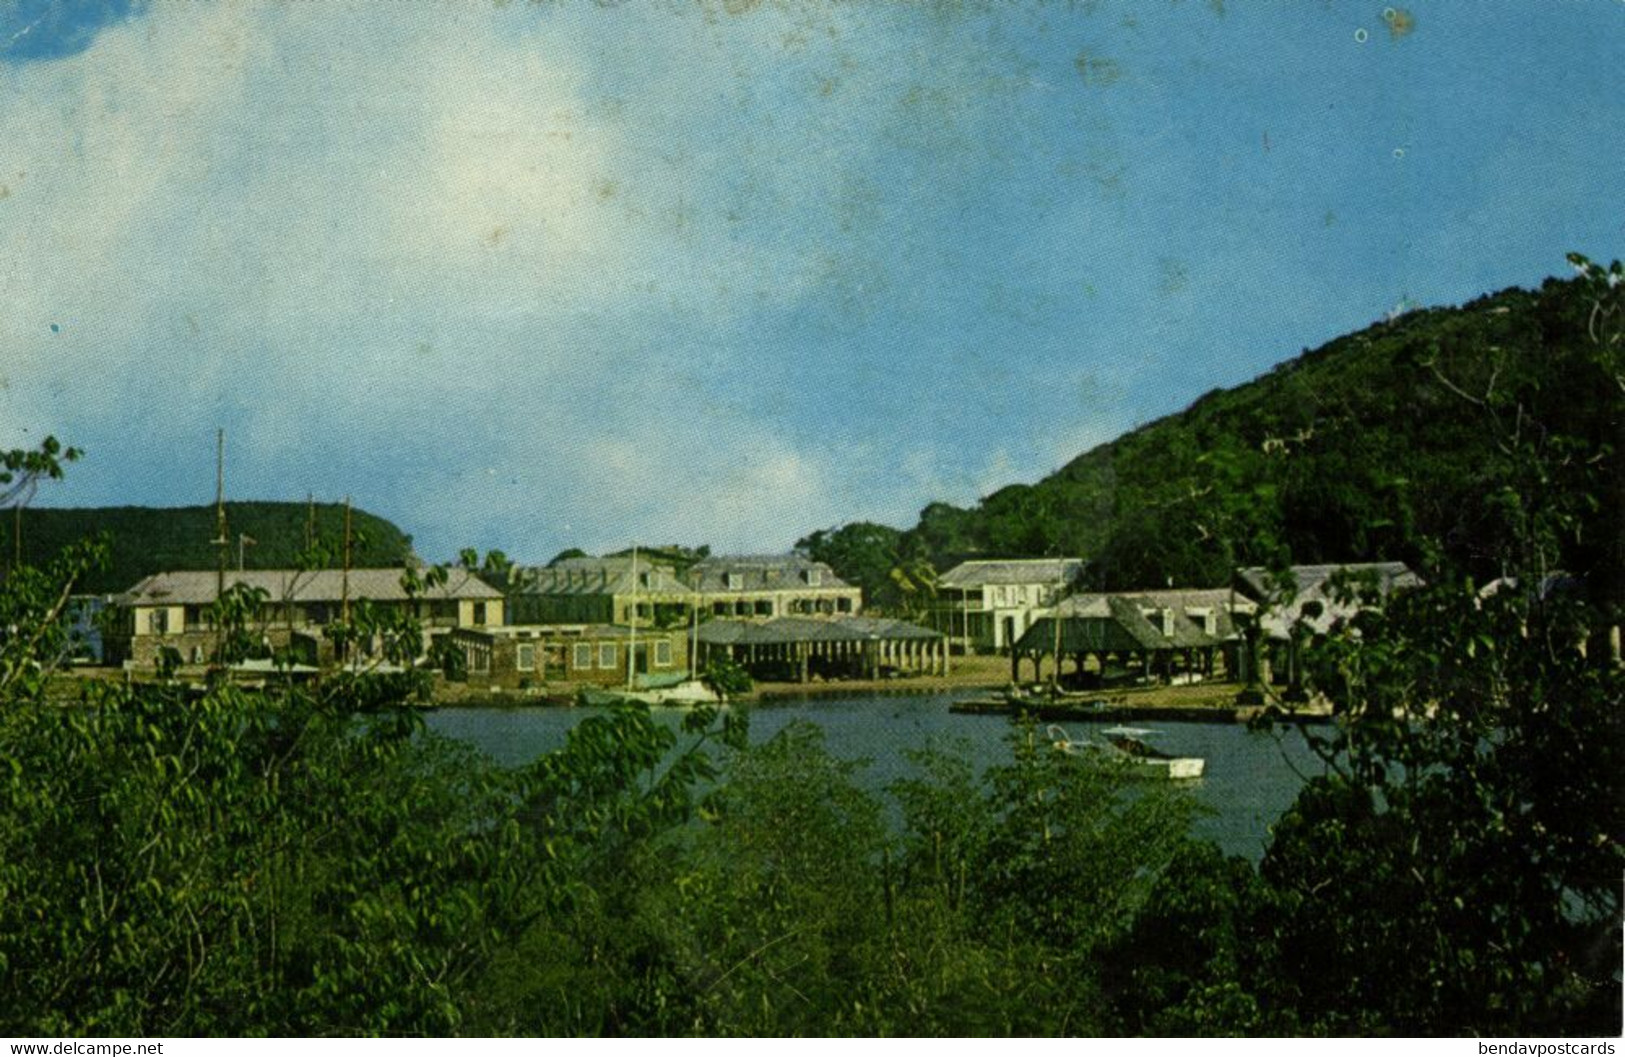 Antigua, B.W.I., St. John's Dockyard, Yachting Haven (1964) Postcard - Antigua & Barbuda